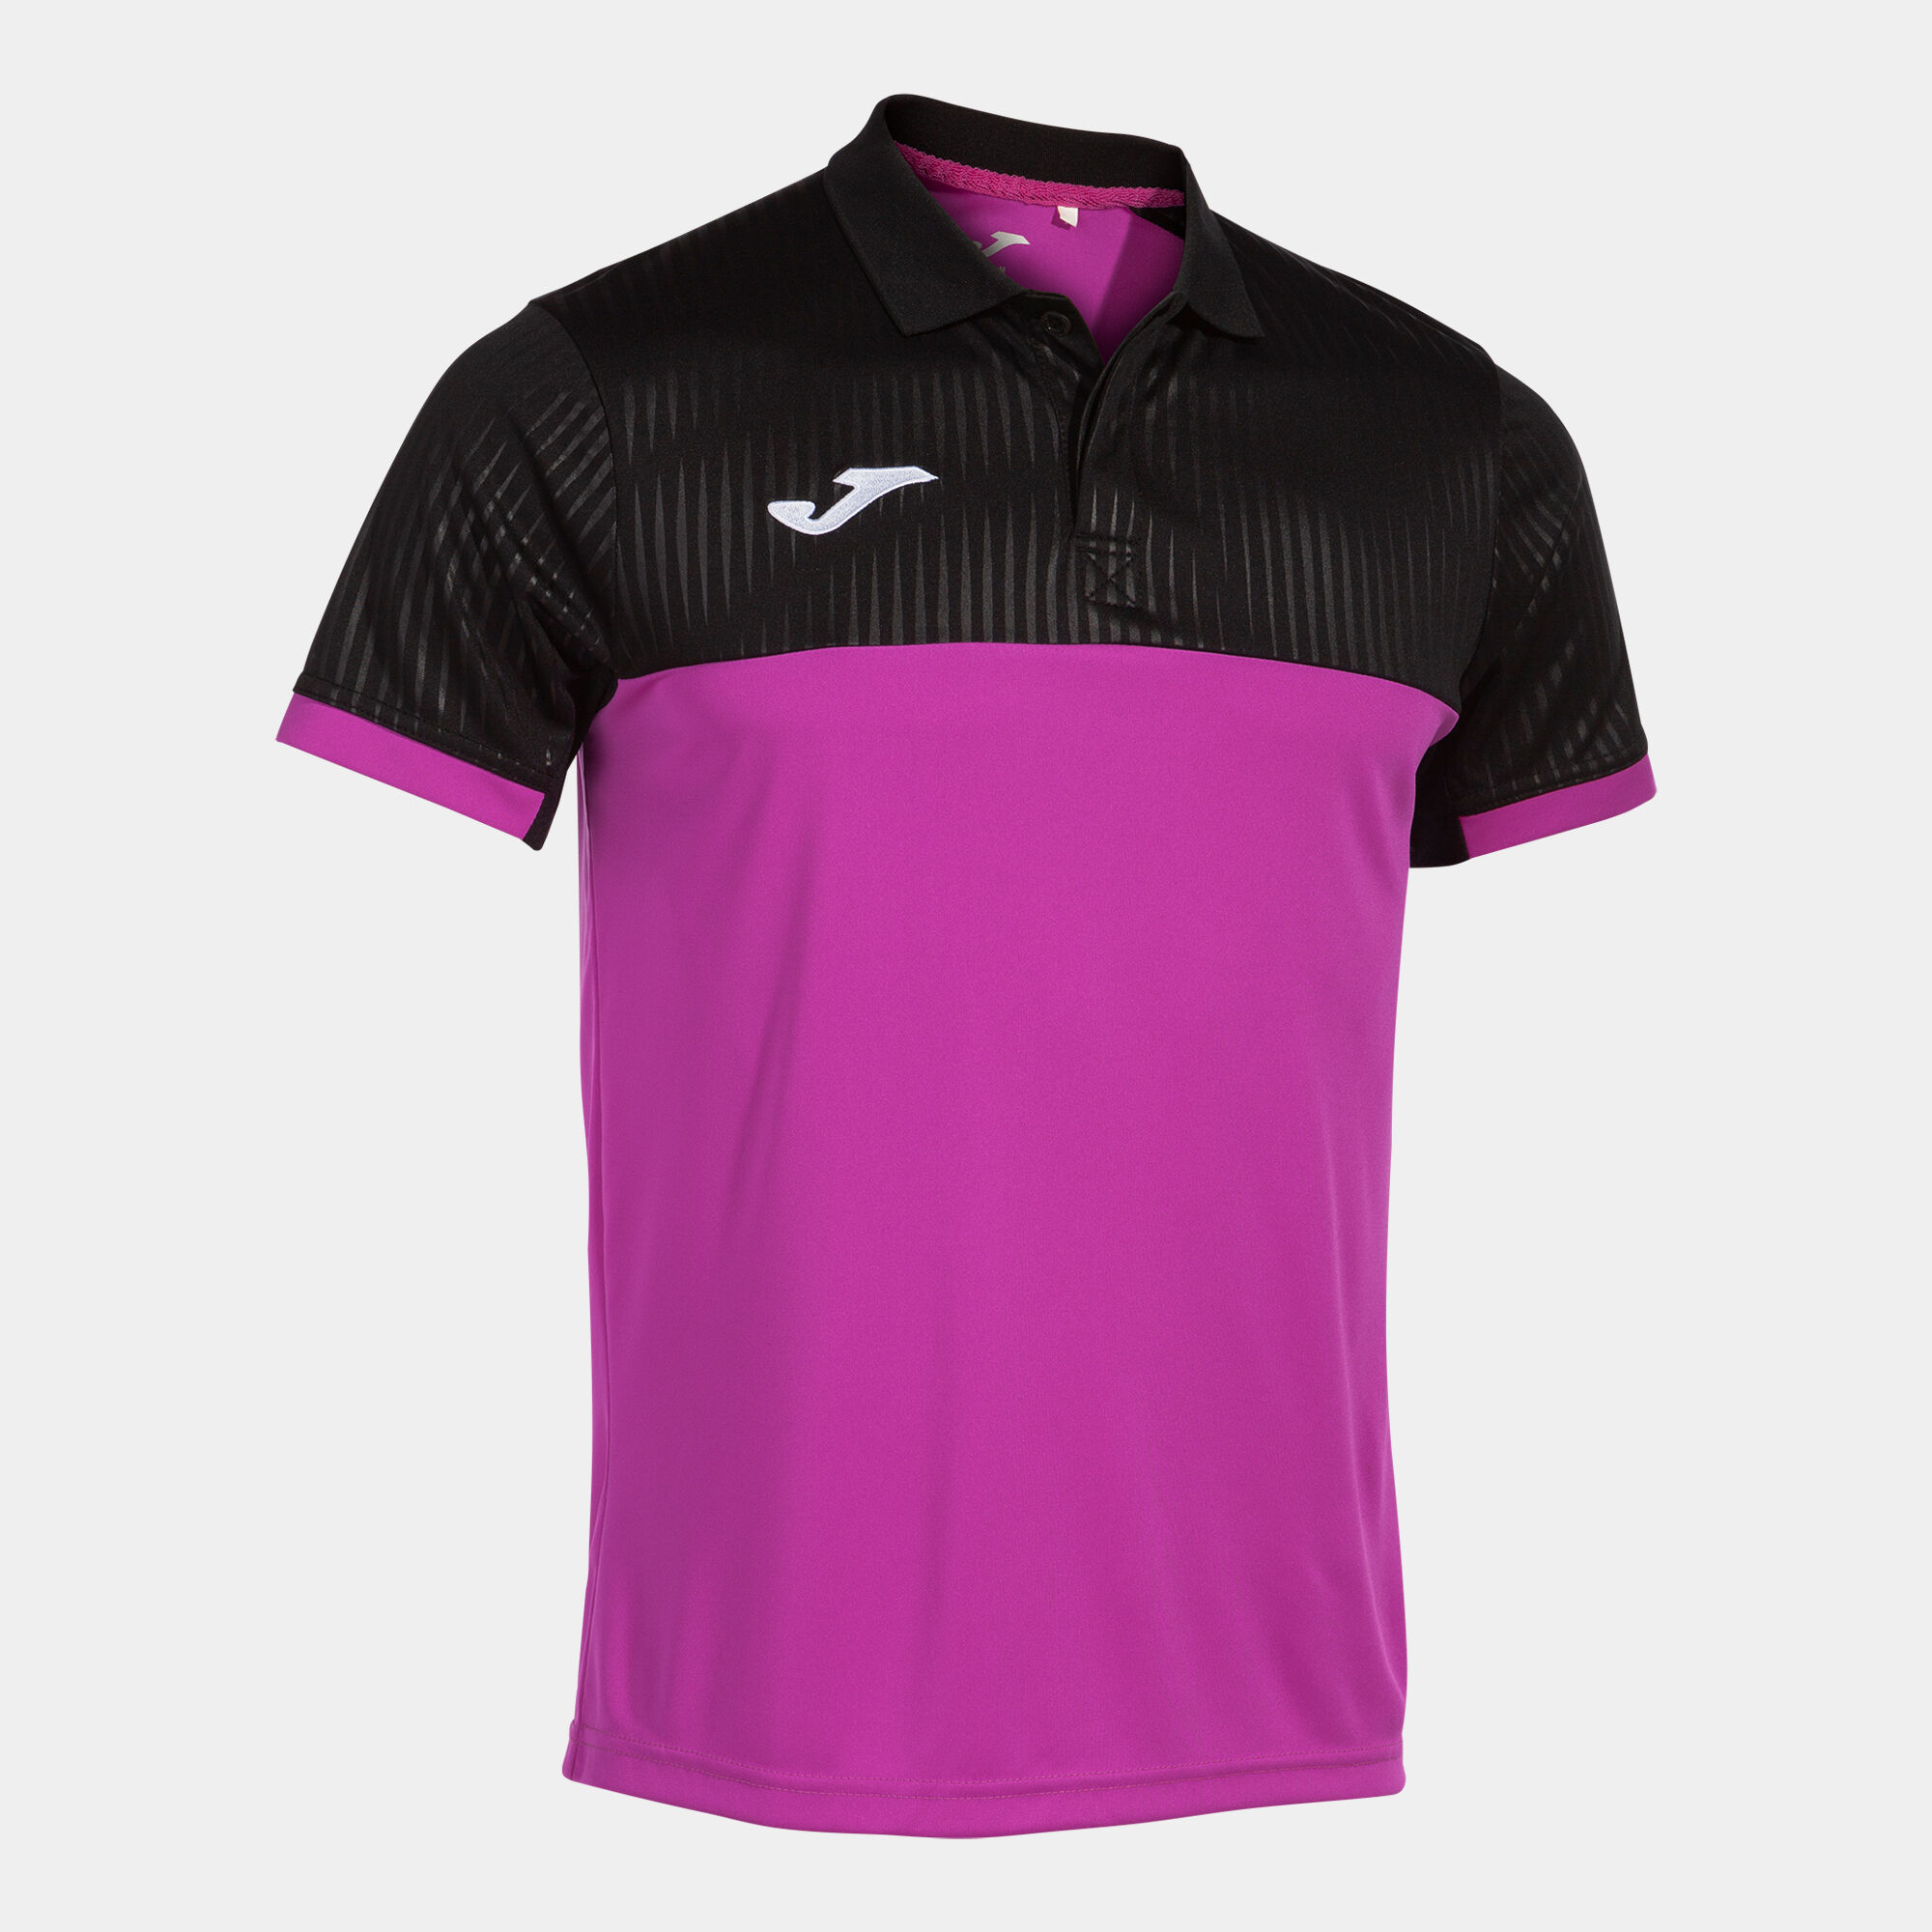 Polo shirt short-sleeve man Montreal fluorescent pink black